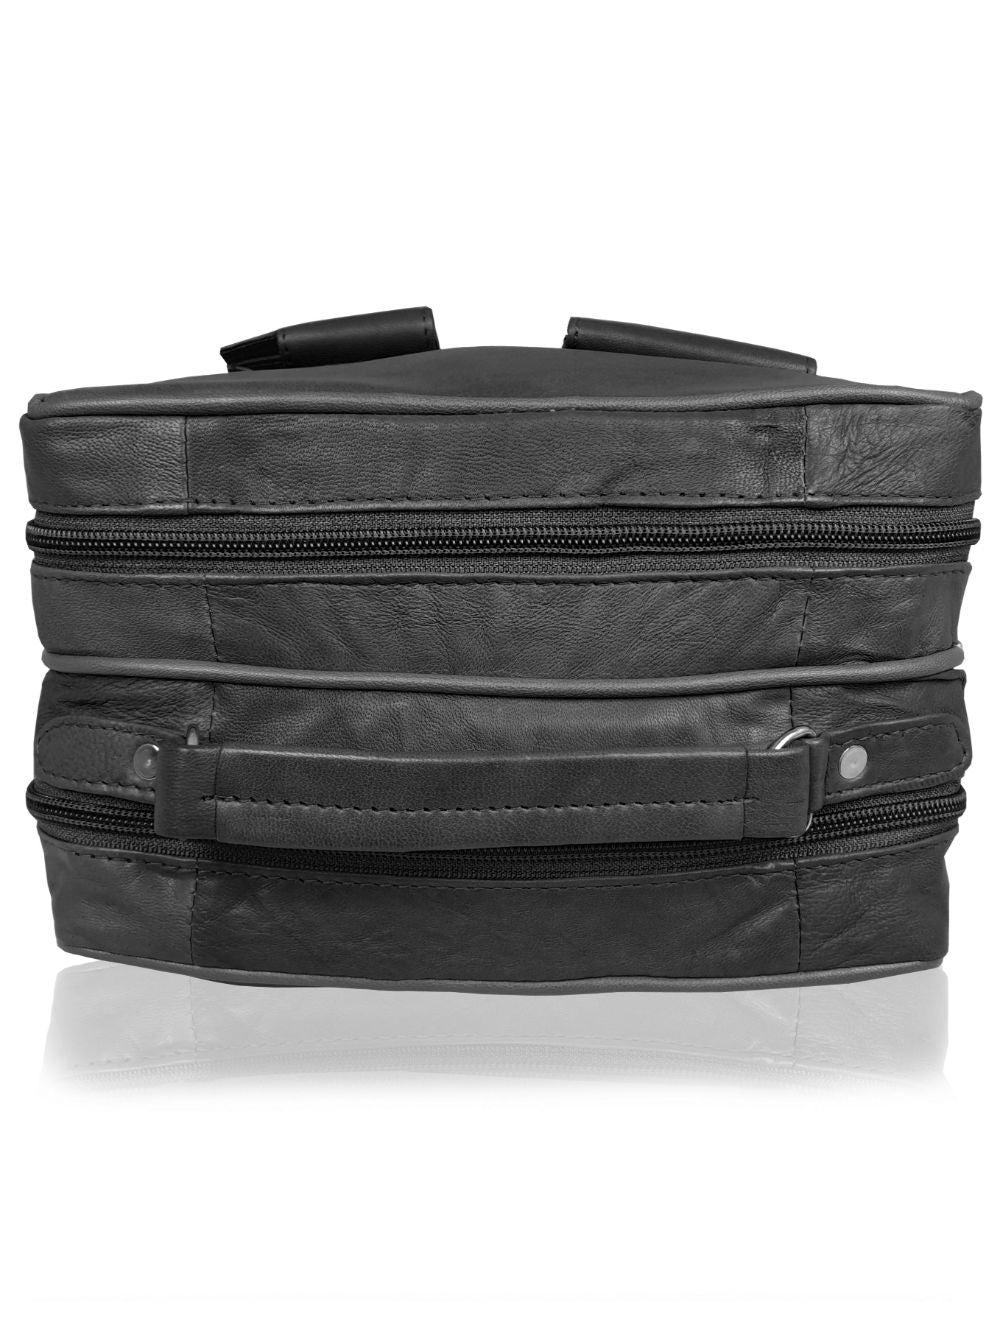 Roamlite Mens Travel Bag Black Leather RL504 top